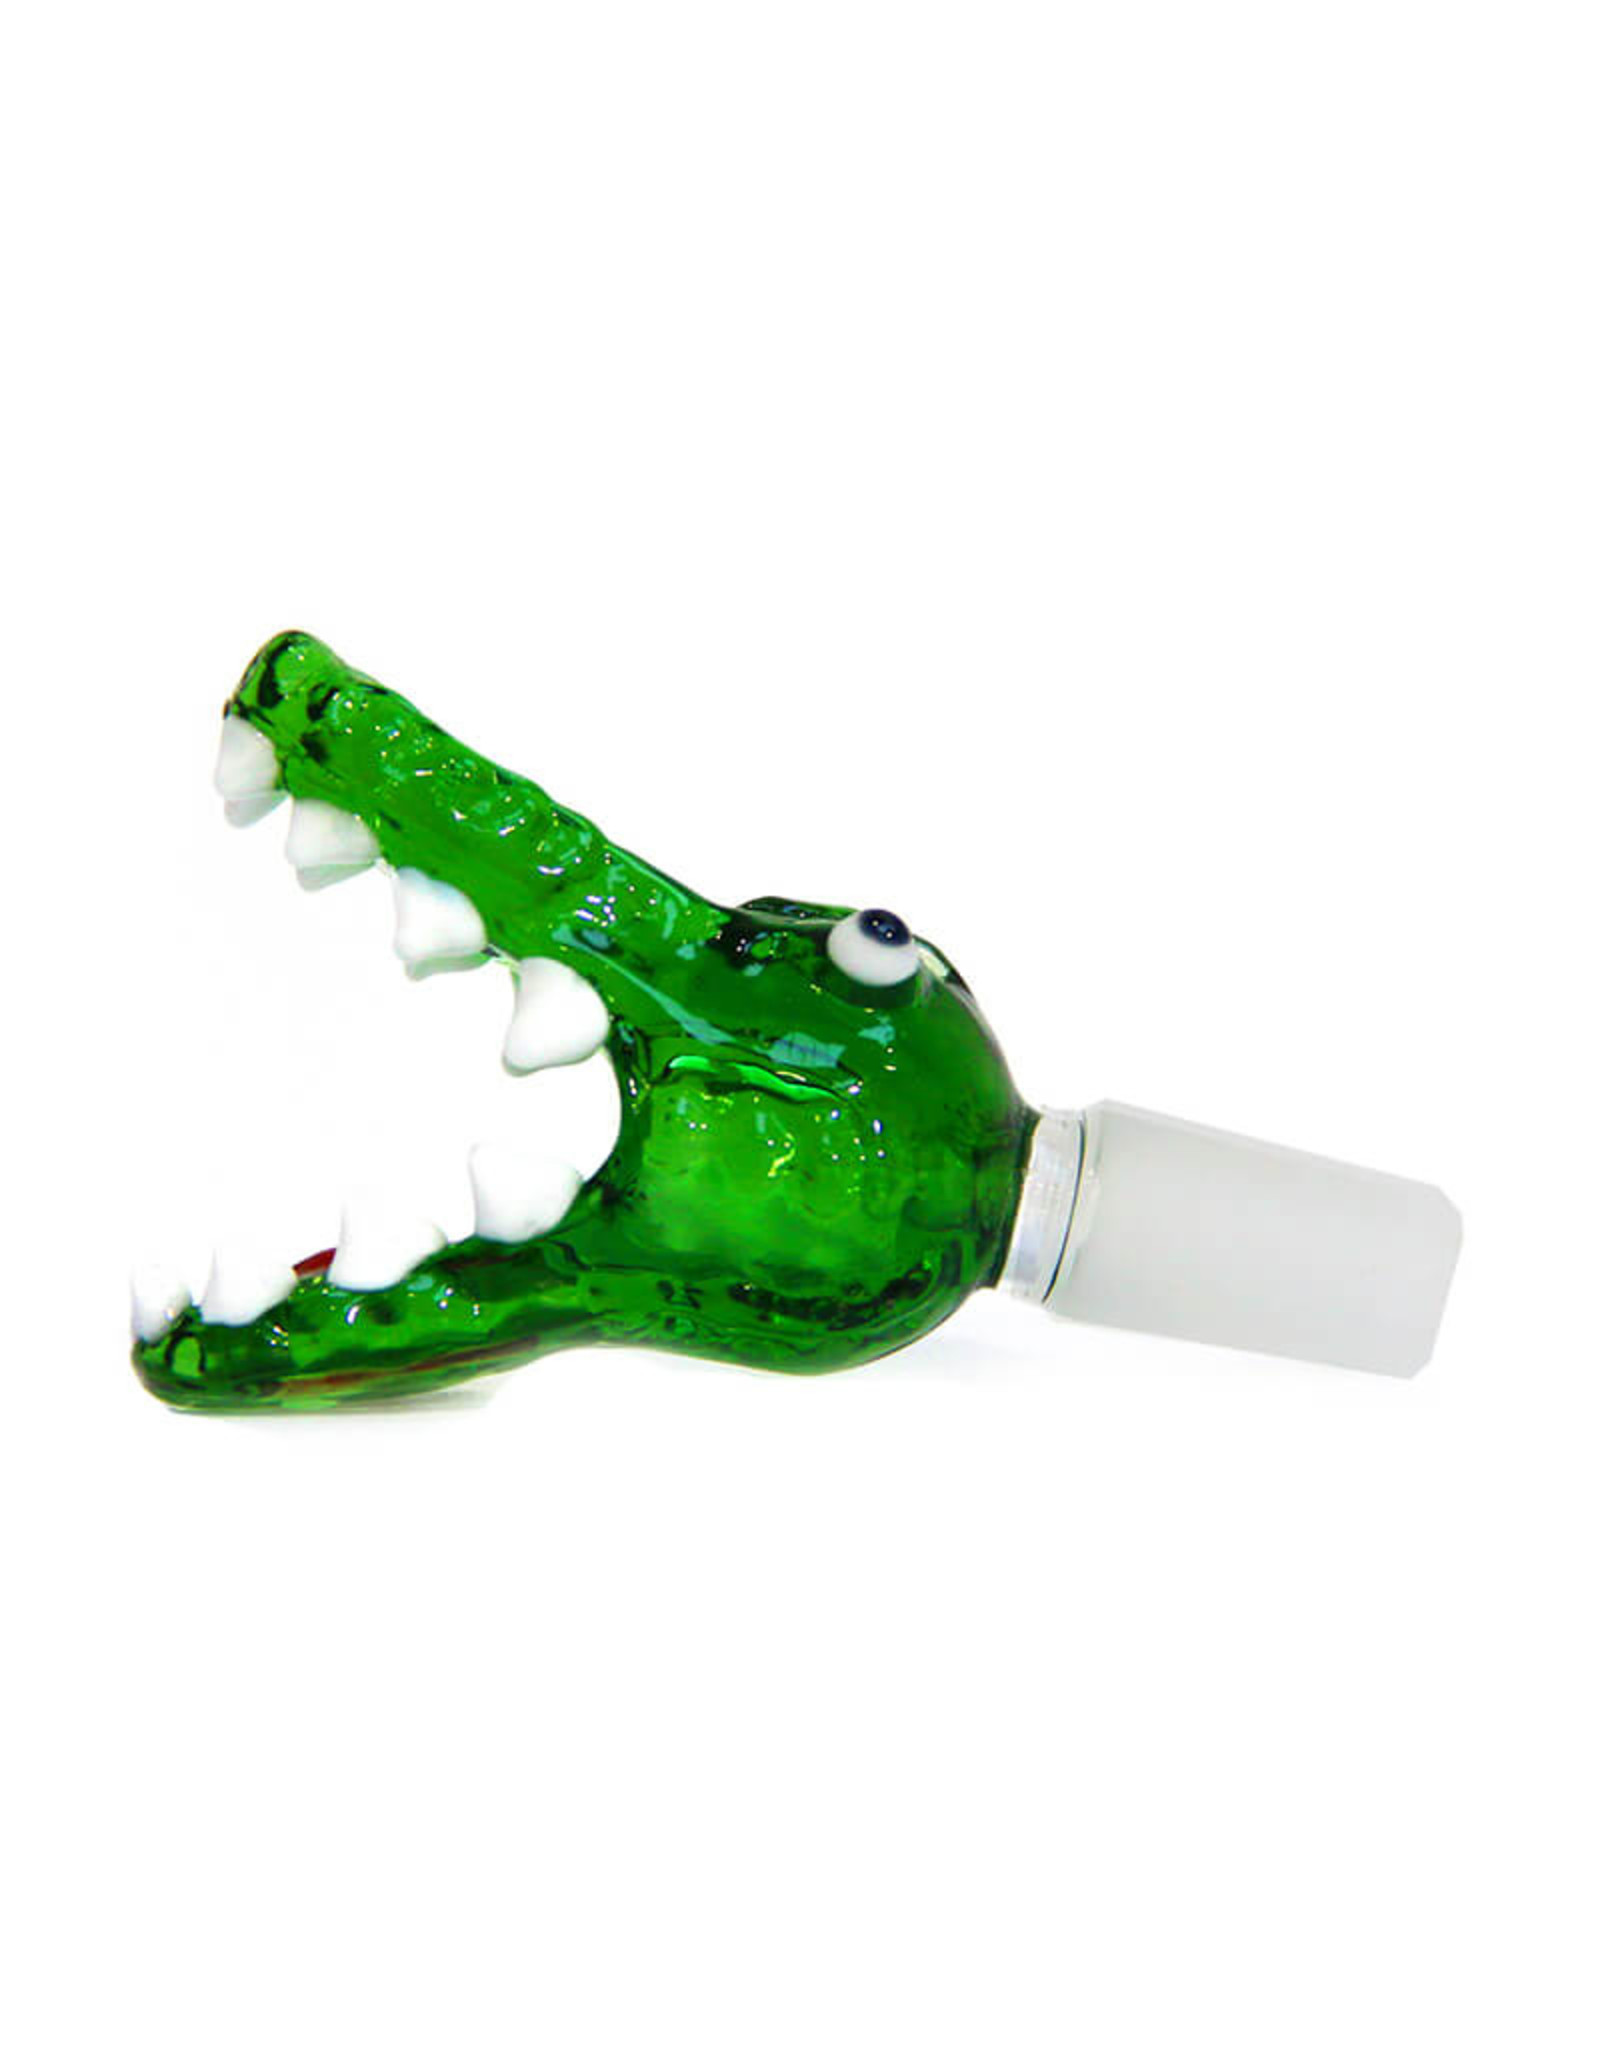 Crocodile Green Glass Bong Bowl 14mm